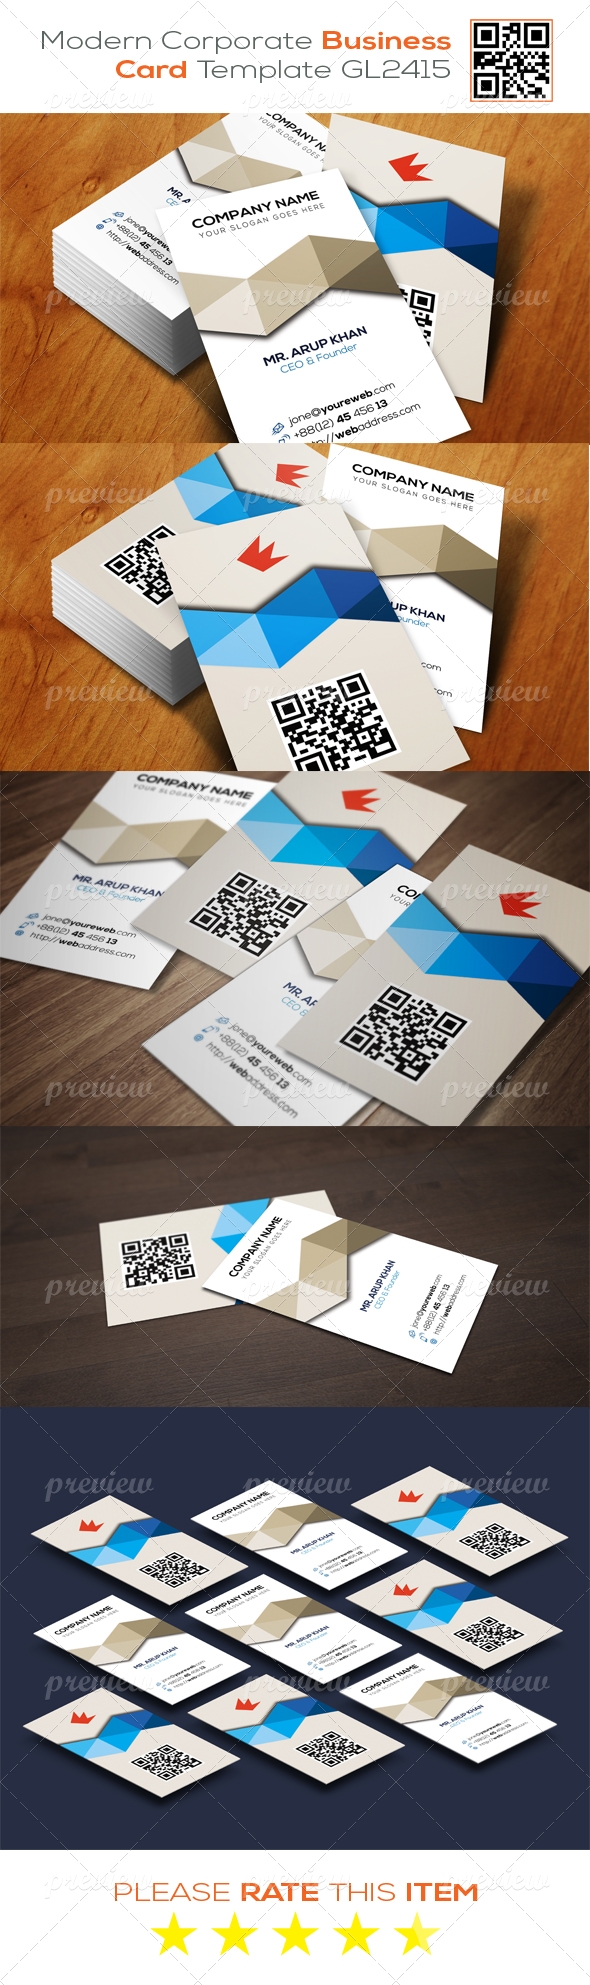 Modern Corporate Business Card Template GL24015